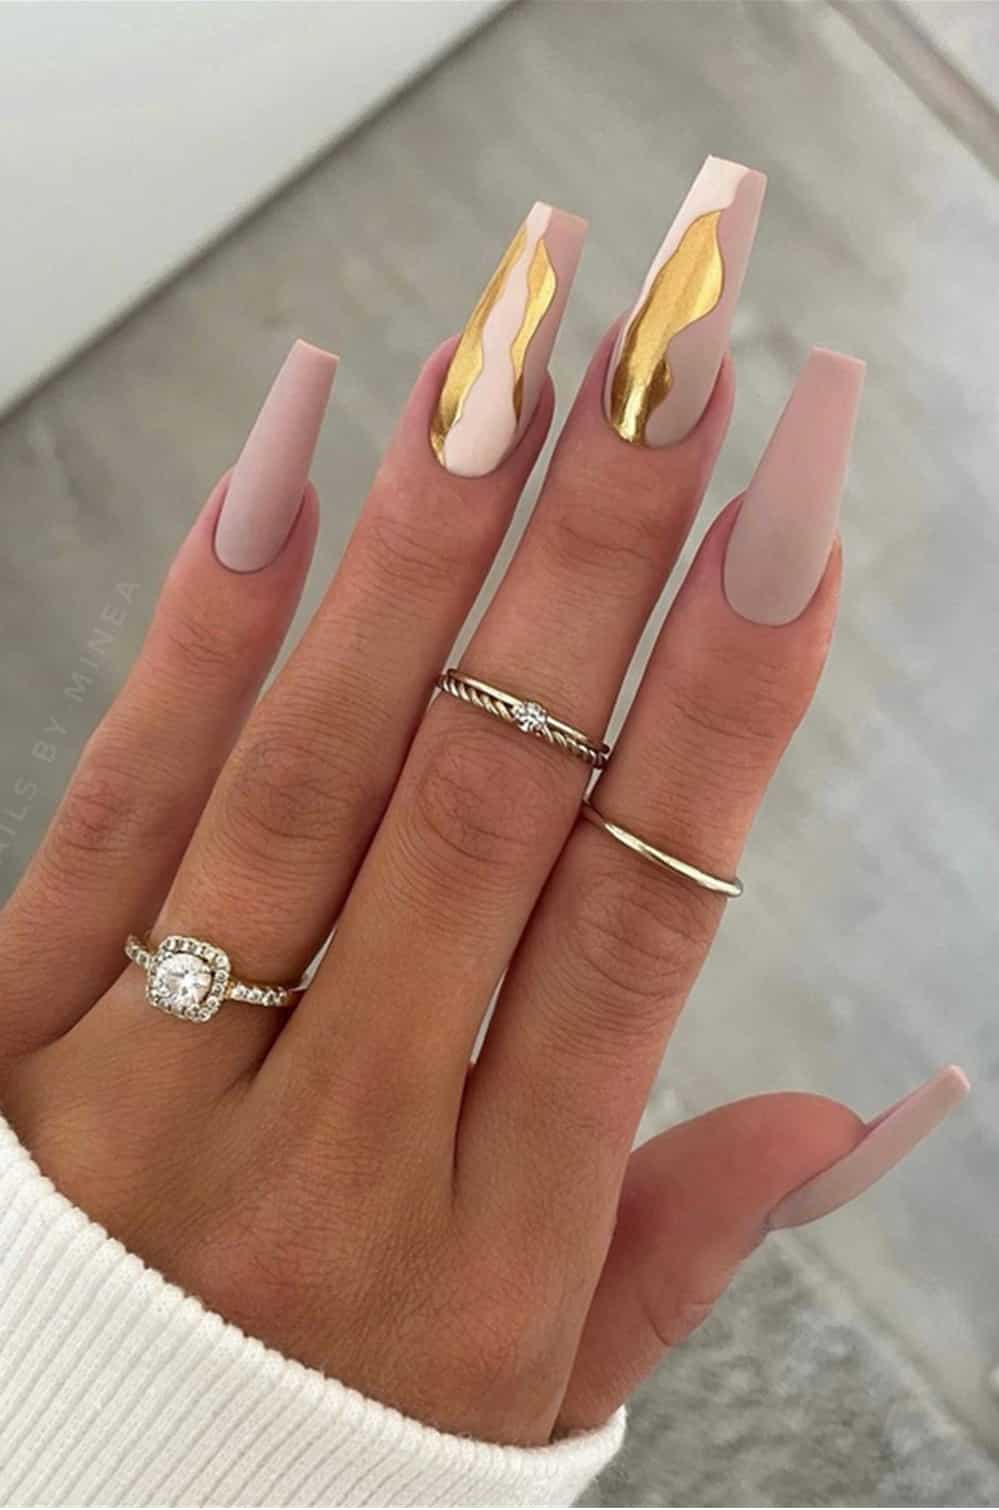 golden nail designs